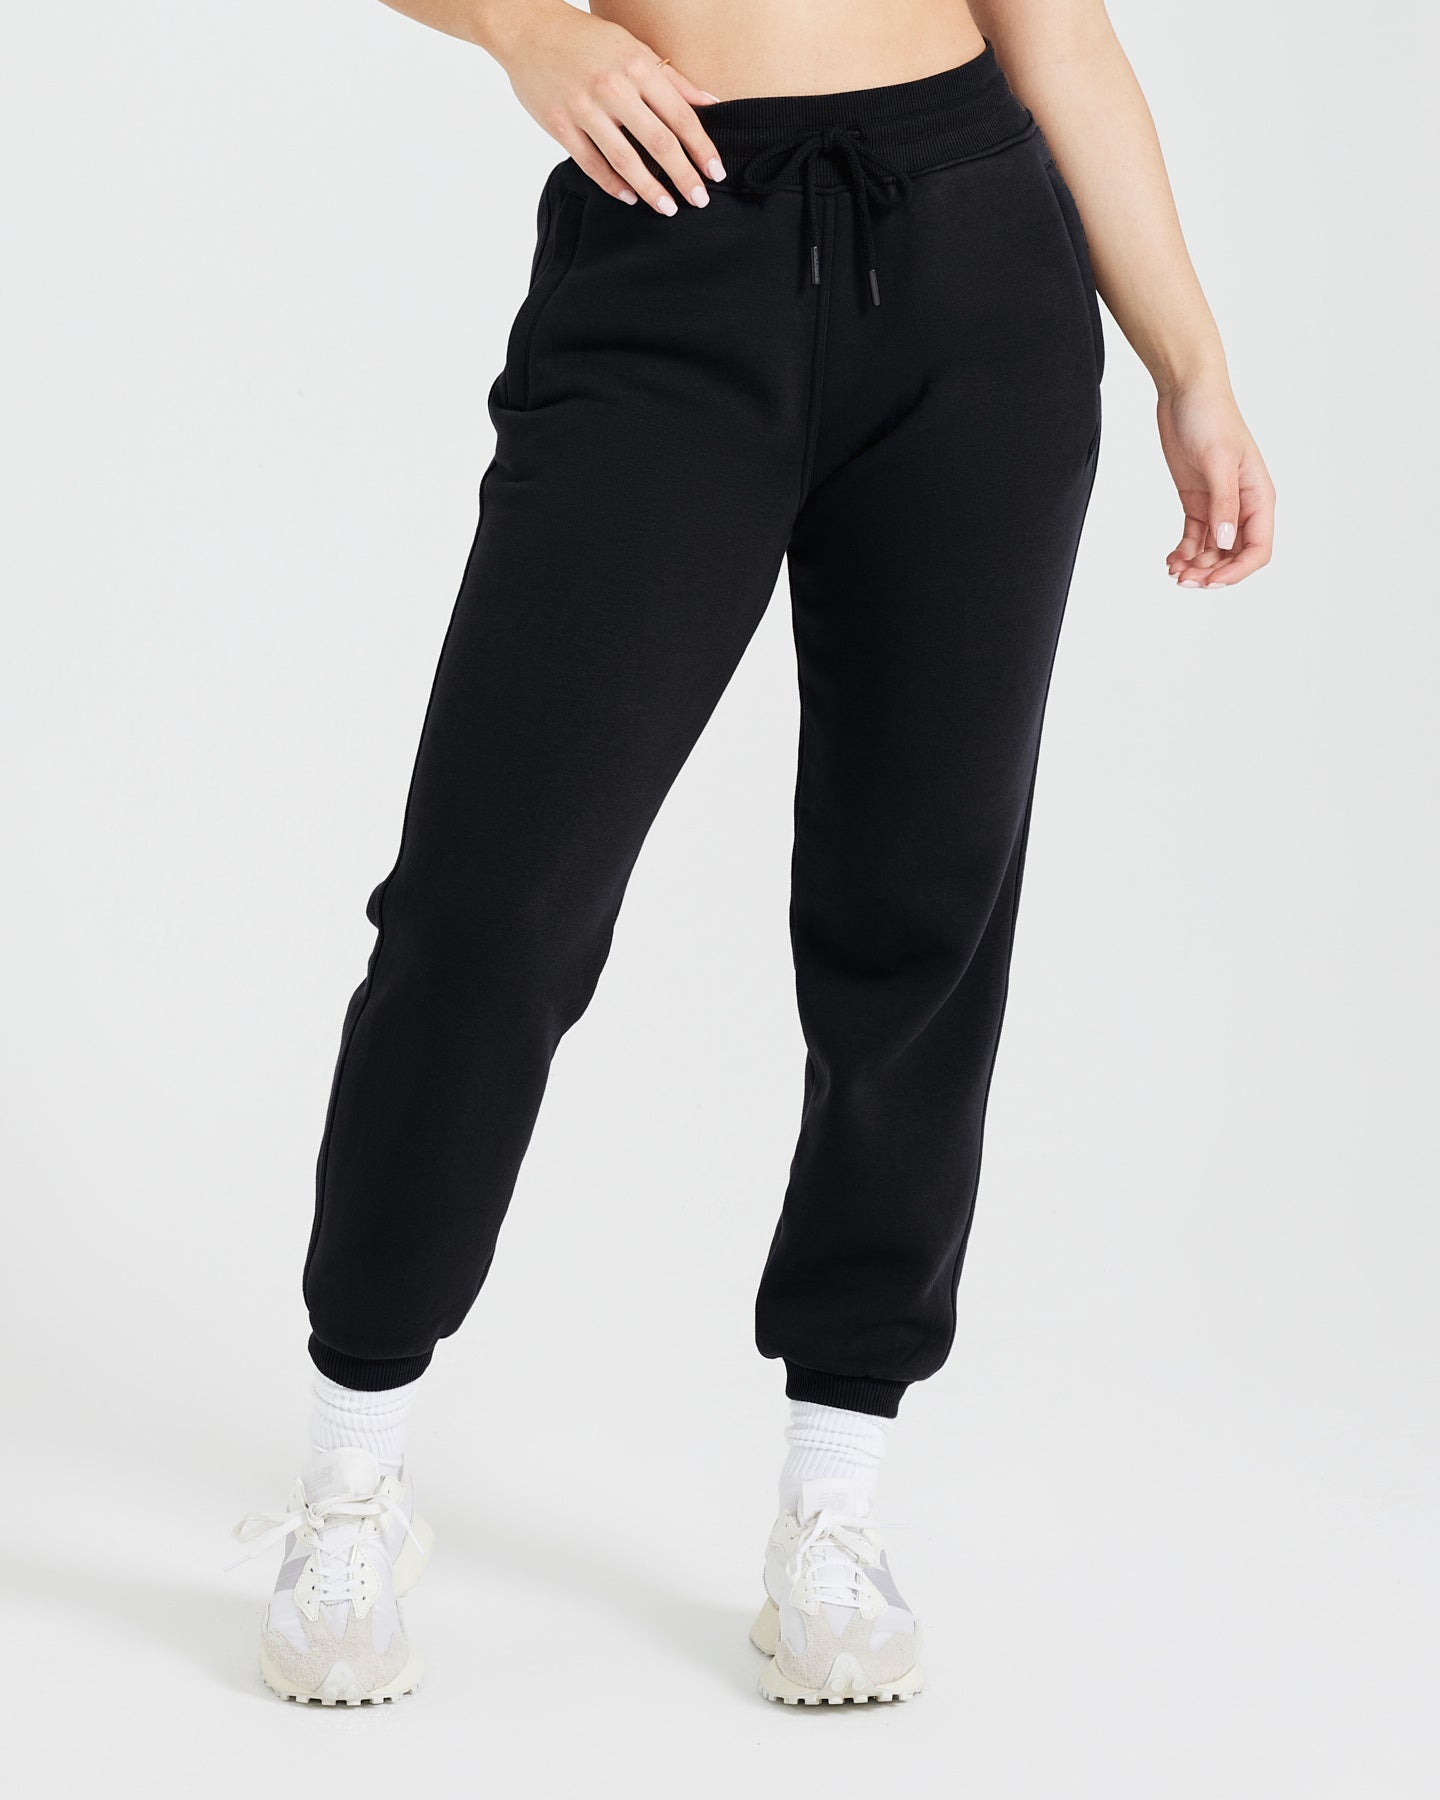 Black Joggers Women with Fronz Zip Pockets | Oner Active US